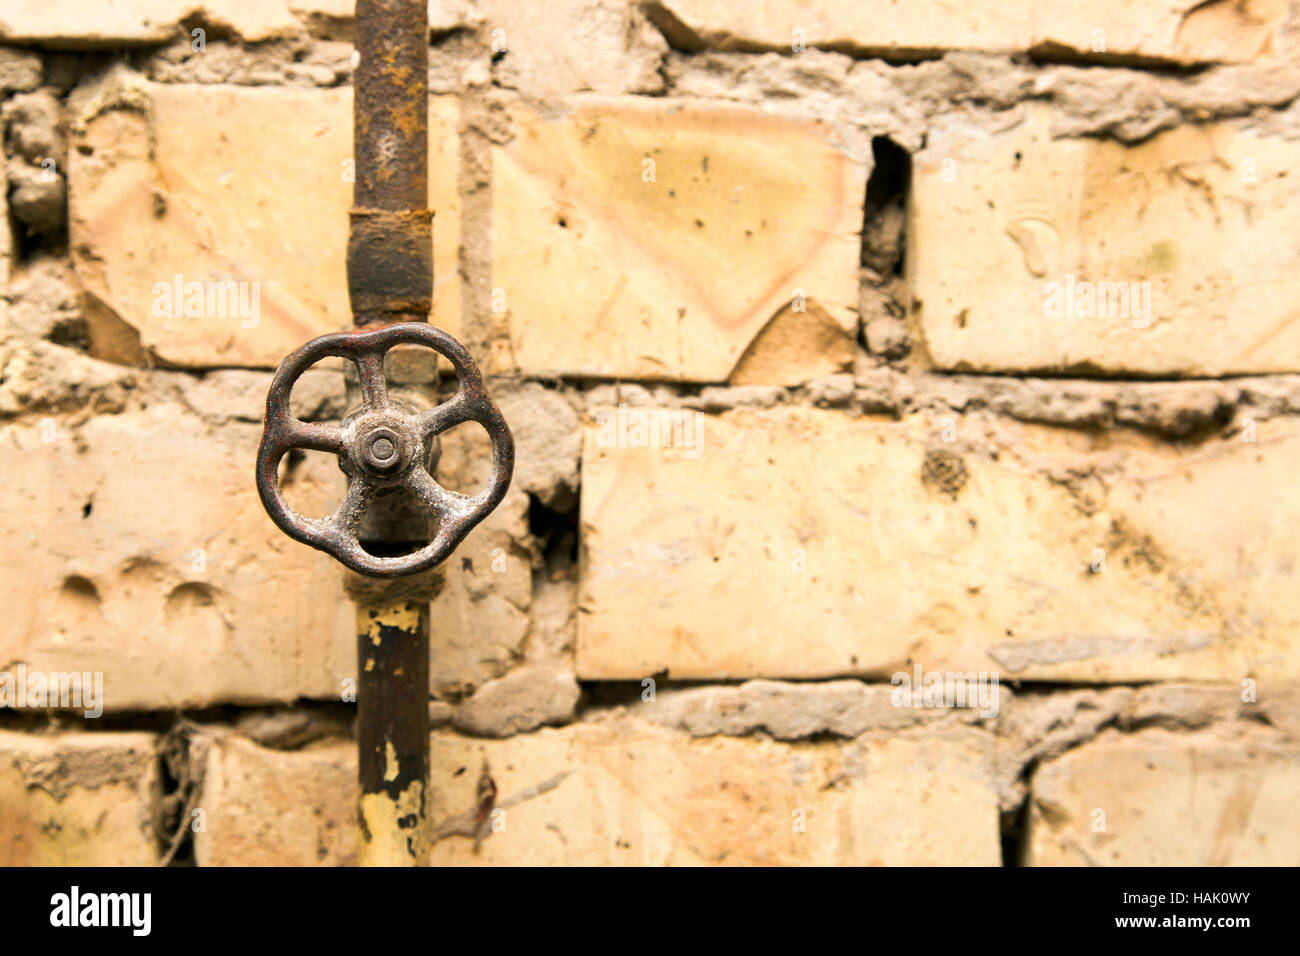 rusty pipeline valve on brick wall background Stock Photo